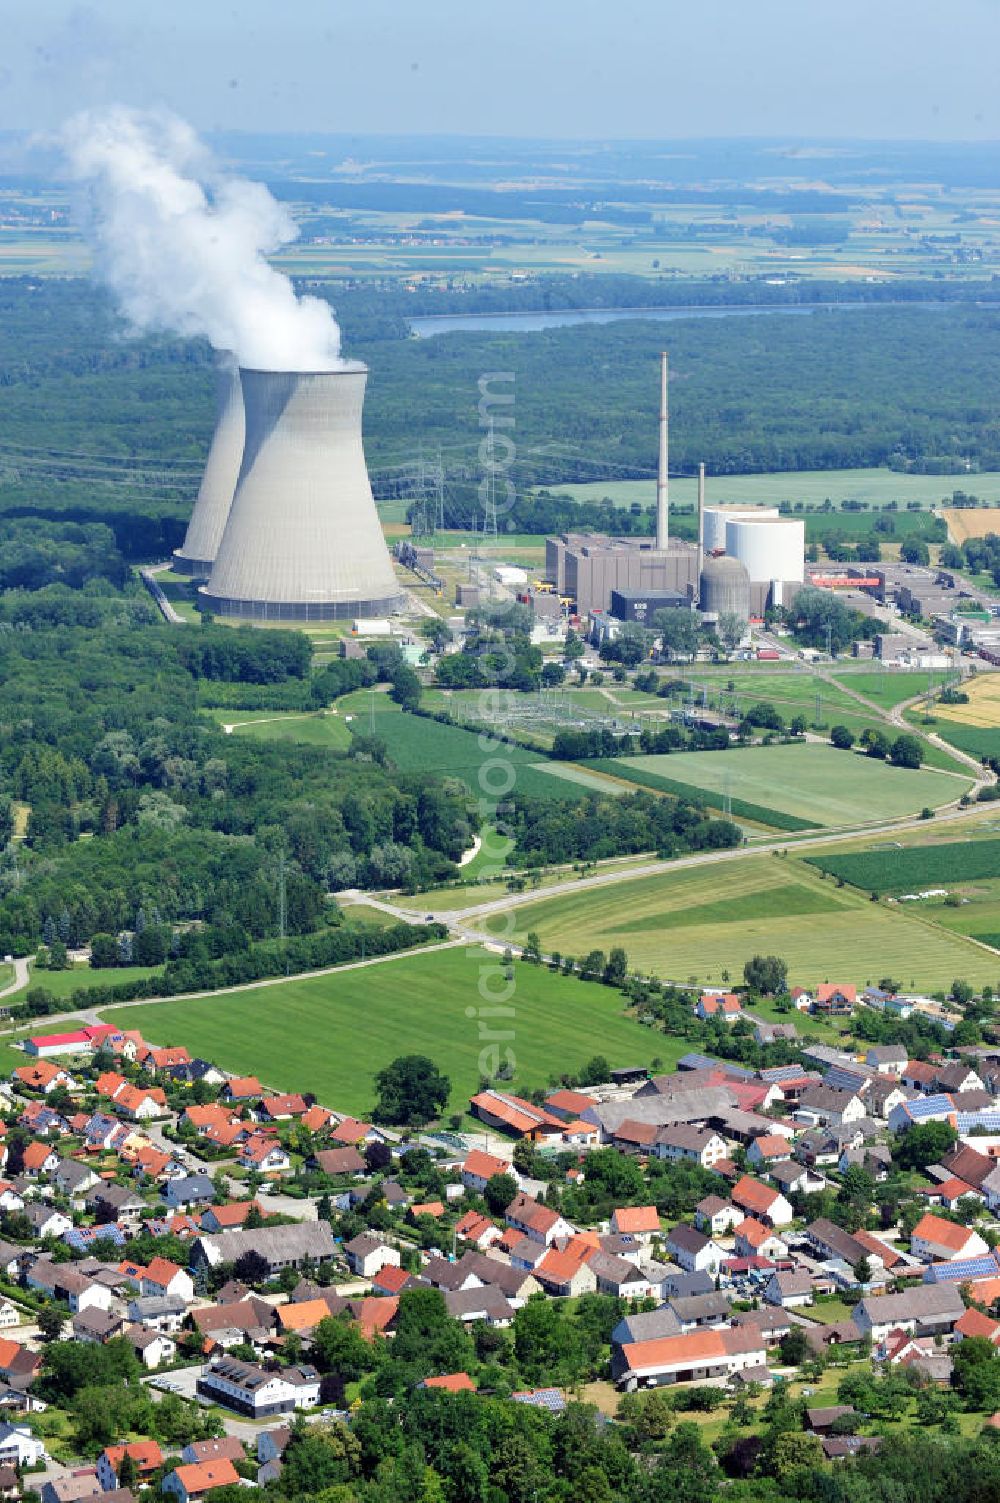 Aerial image Gundremmingen - Kernkraftwerk KKW / Atomkraftwerk AKW Gundremmingen KGG bzw. KRB an der Donau in Bayern. Betreiber ist die Kernkraftwerk Gundremmingen GmbH (KGG). Nuclear power station NPS / atomic plant Gundremmingen at the Donau river in Bavaria.